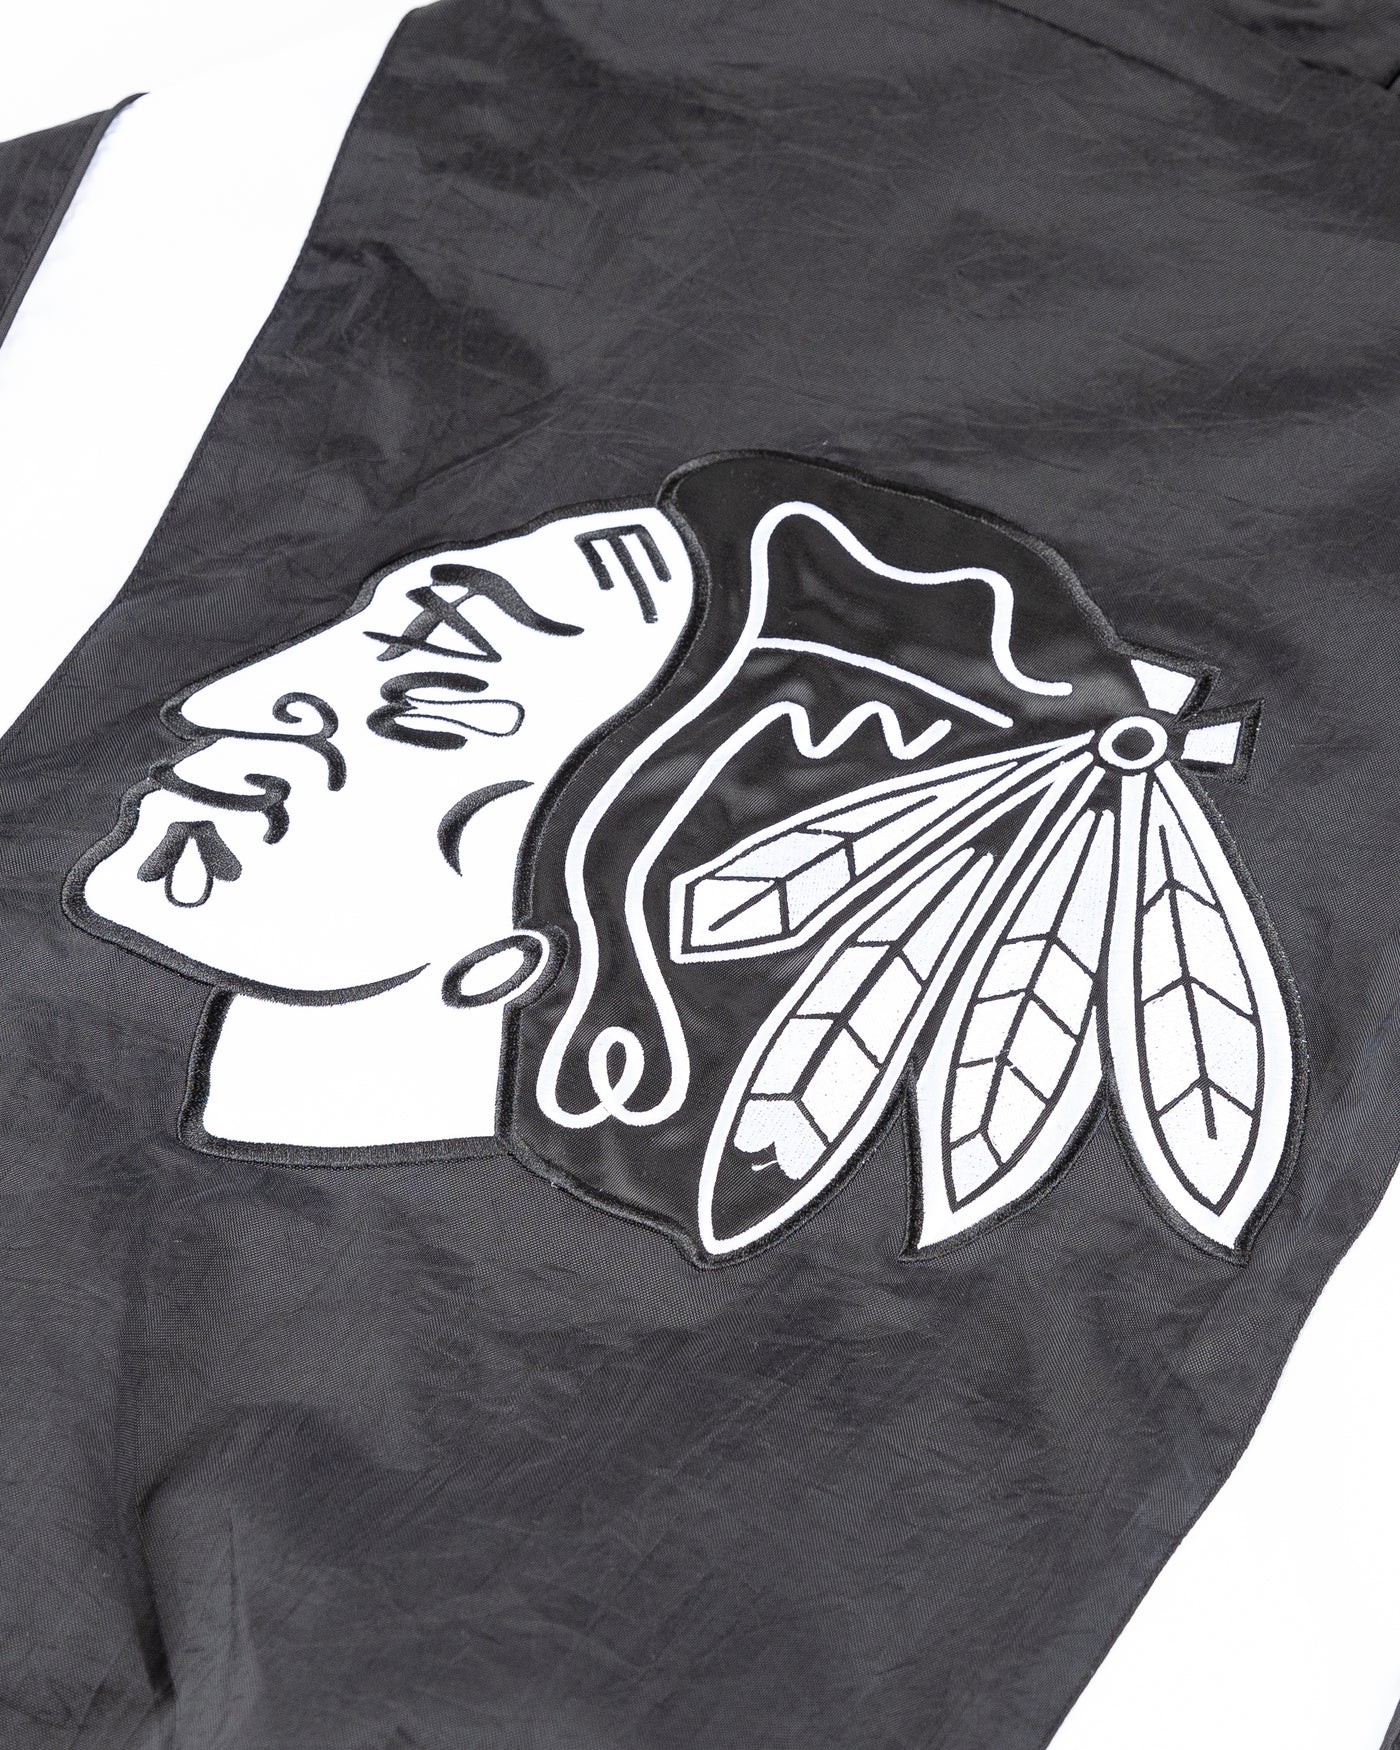 black Starter windbreaker jacket with Chicago Blackhawks wordmark and primary logo - detail back lay flat